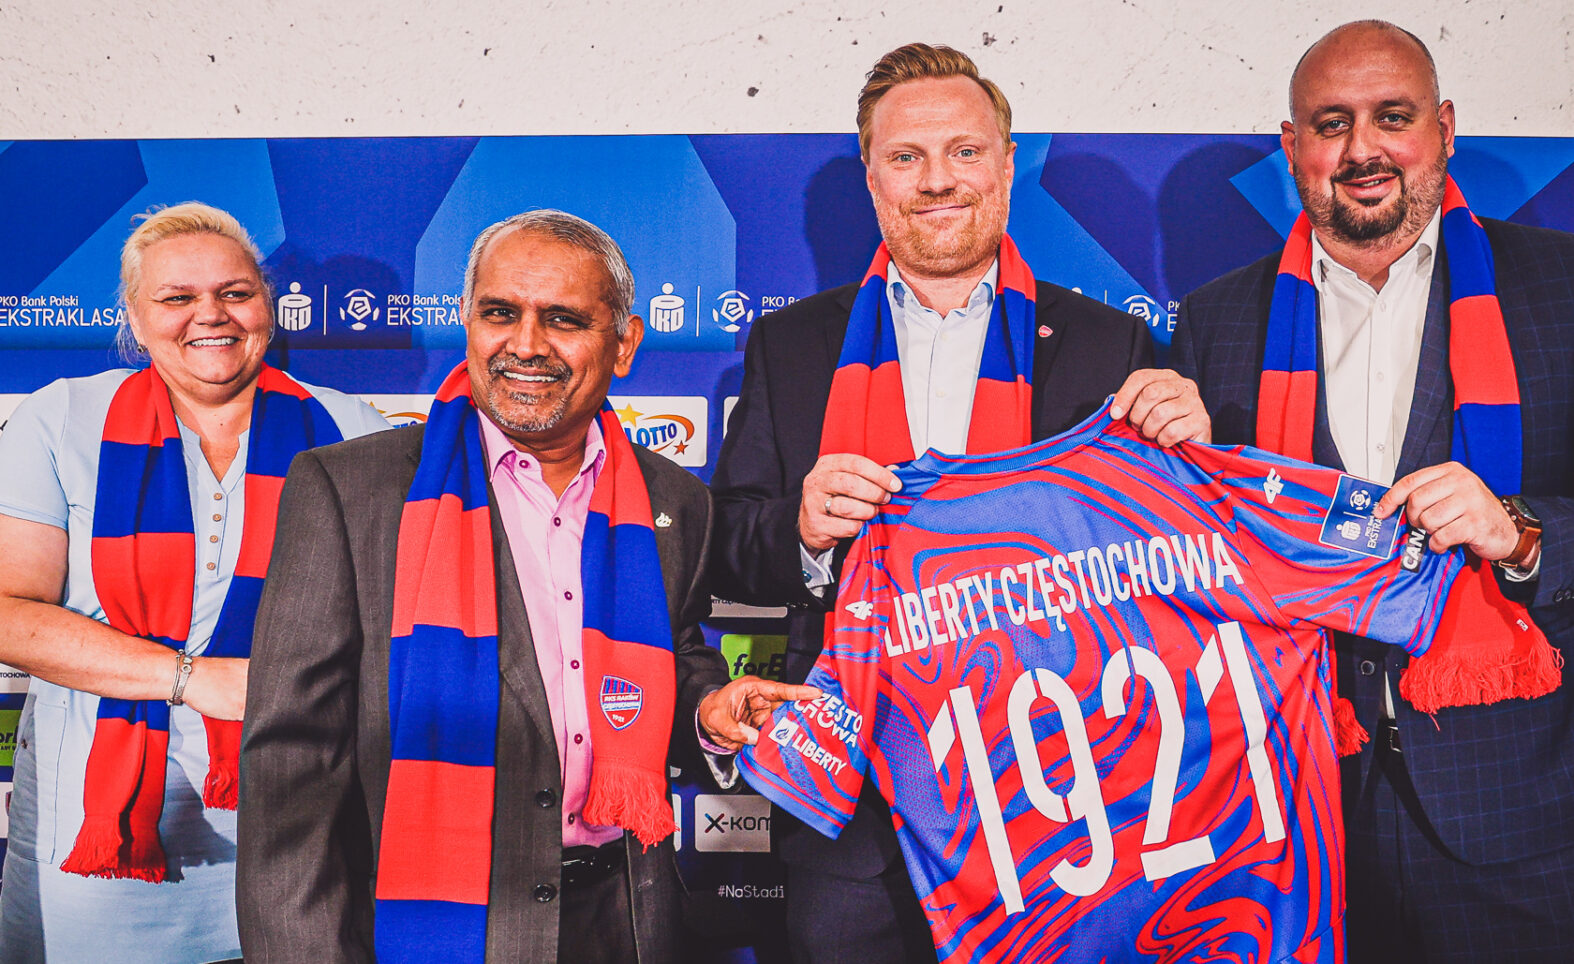 LIBERTY Częstochowa joins the premier league